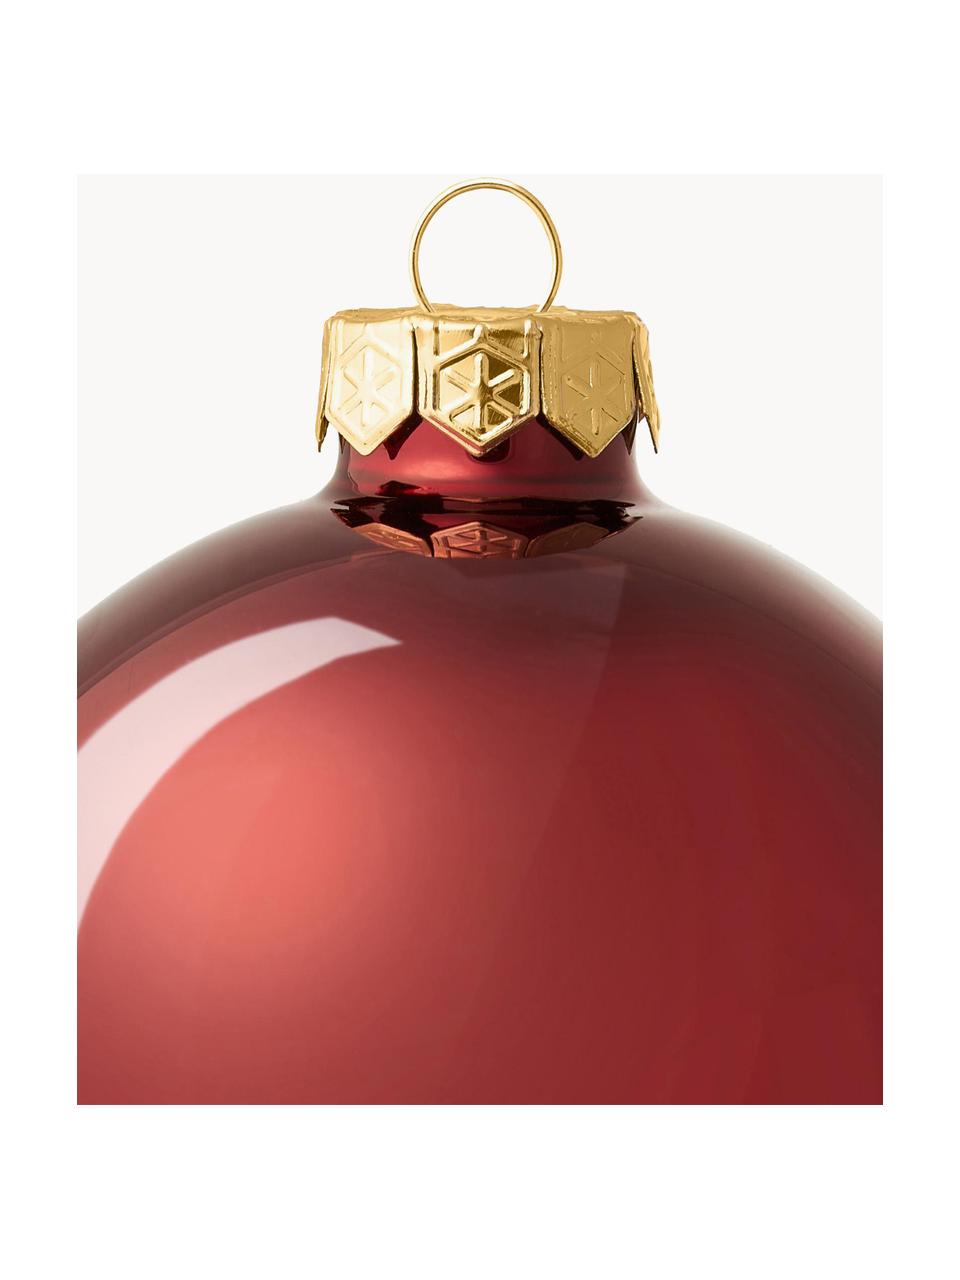 Set 4 palline di Natale Globe, Rosso scuro, Ø 4 cm, 16 pz